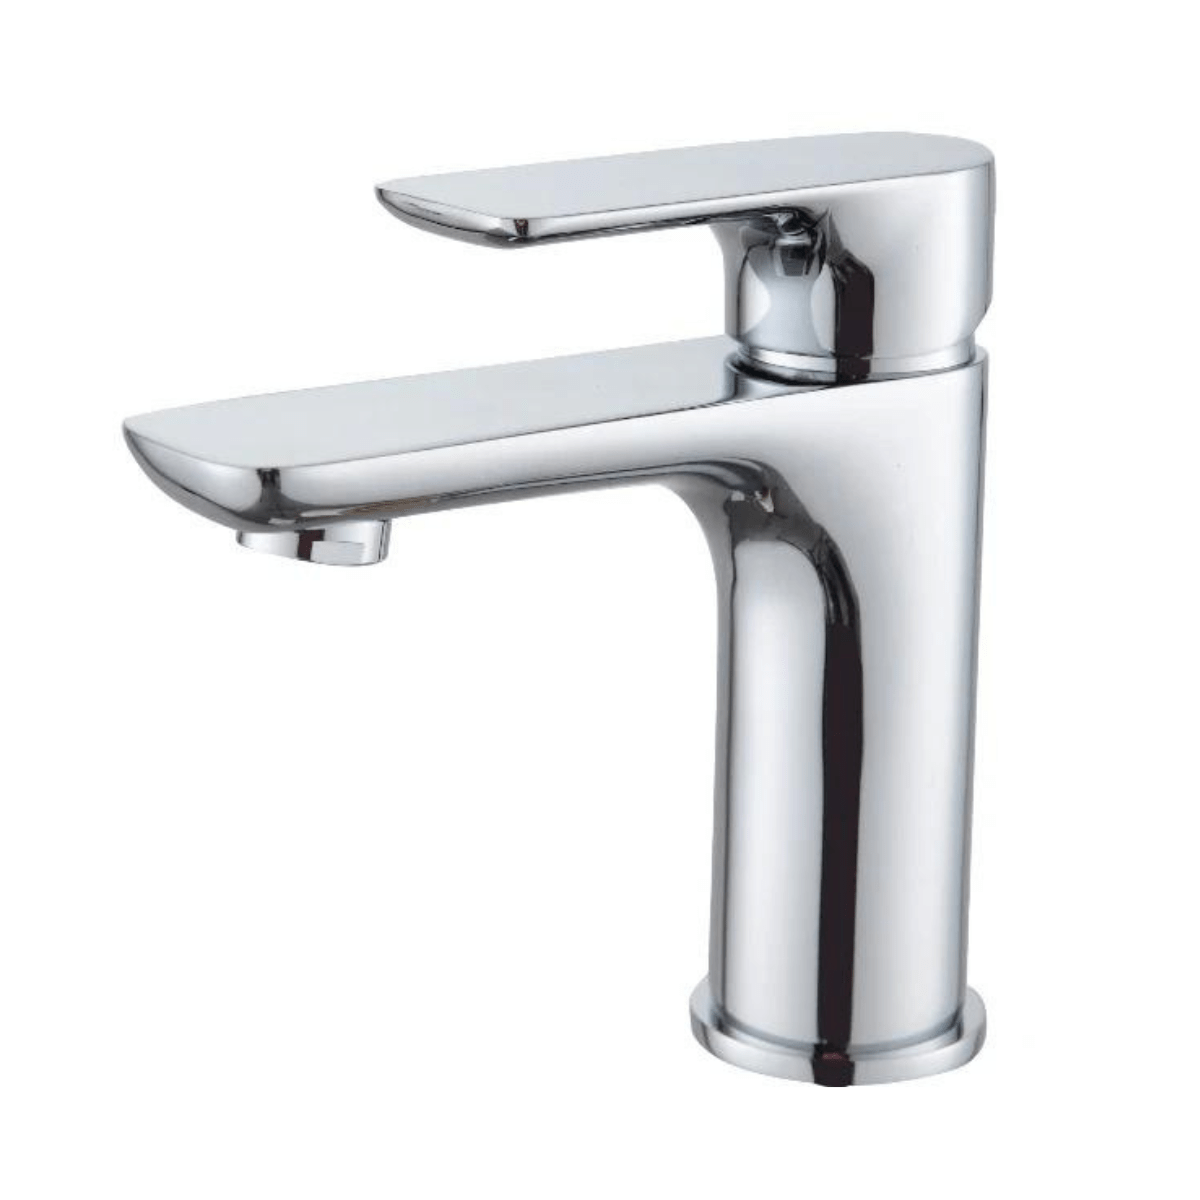 Buy Bathrooms Chrome Single-Lever Hot & Cold Basin Faucet Mixer - CS30 GP | Shop at Supply Master Accra, Ghana Bathroom Faucet Buy Tools hardware Building materials